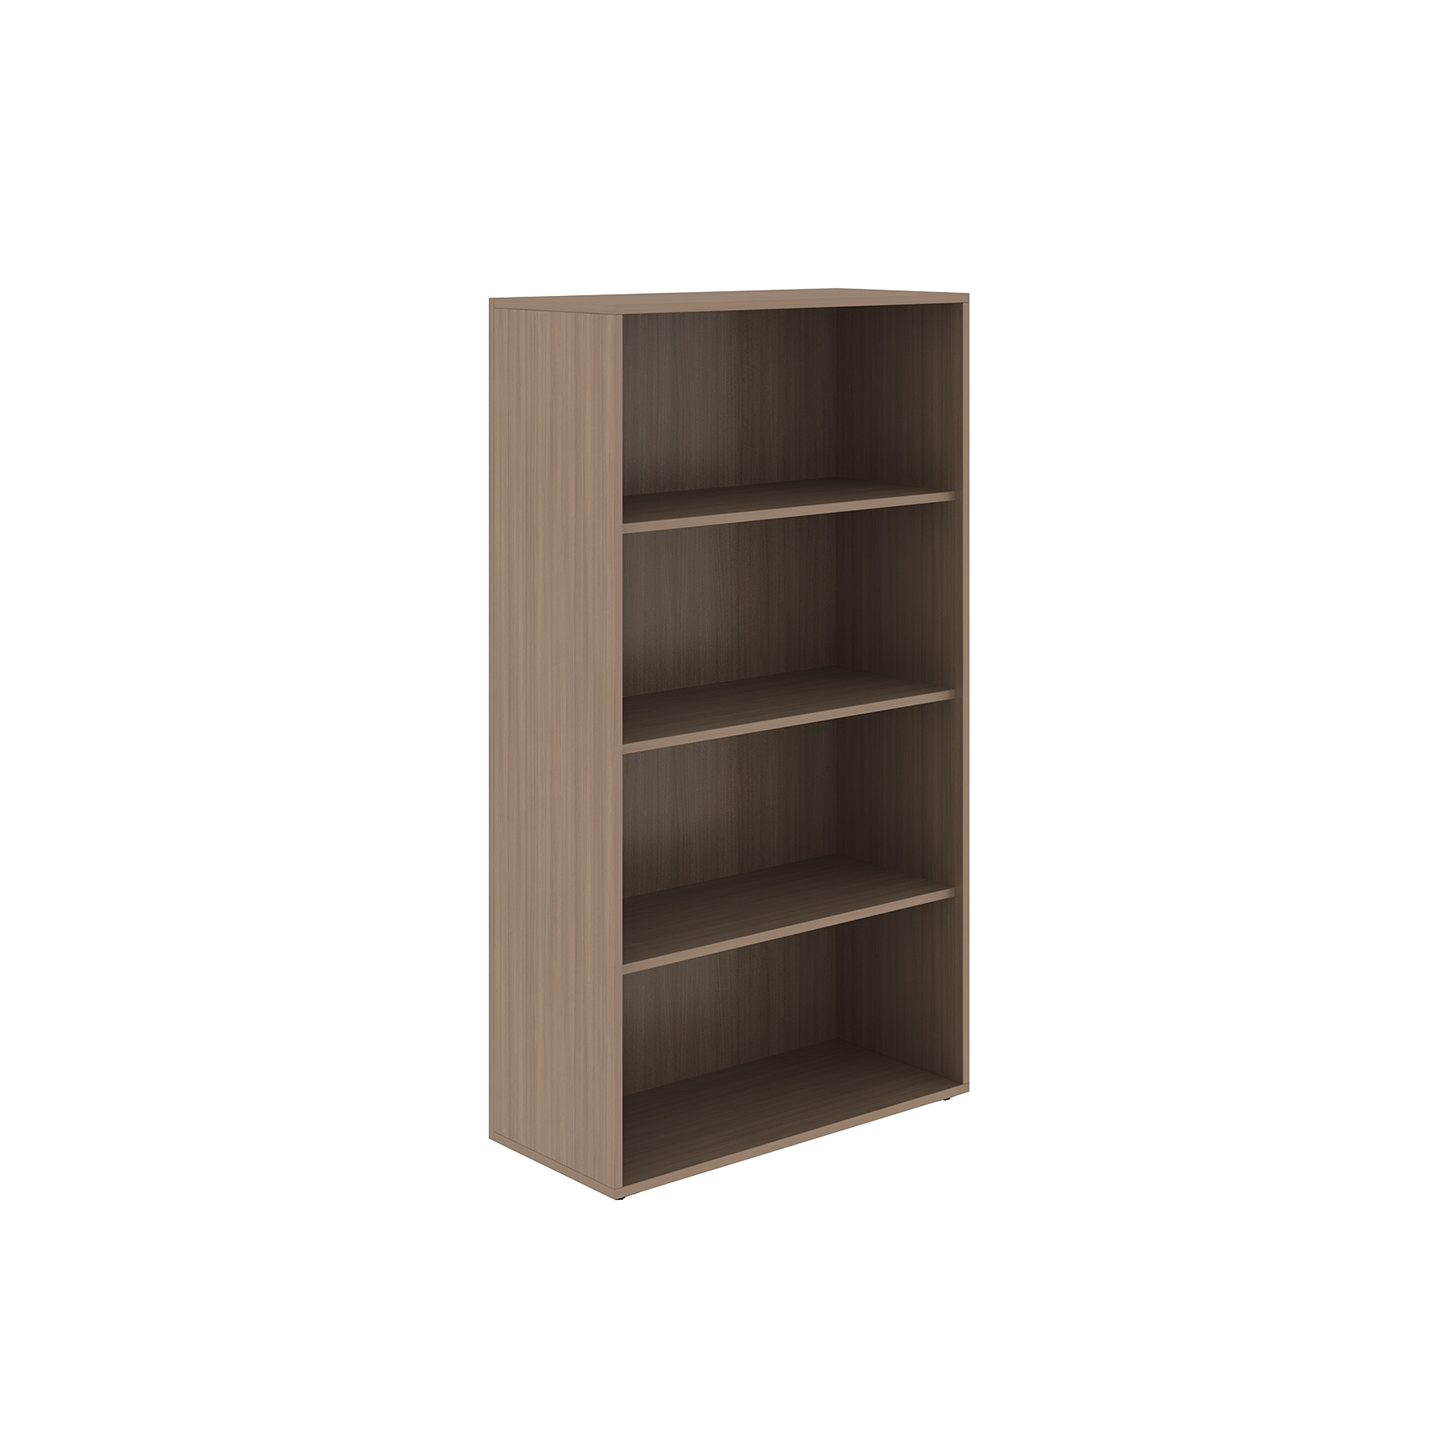 Tall bookcase in walnut woodgrain finish